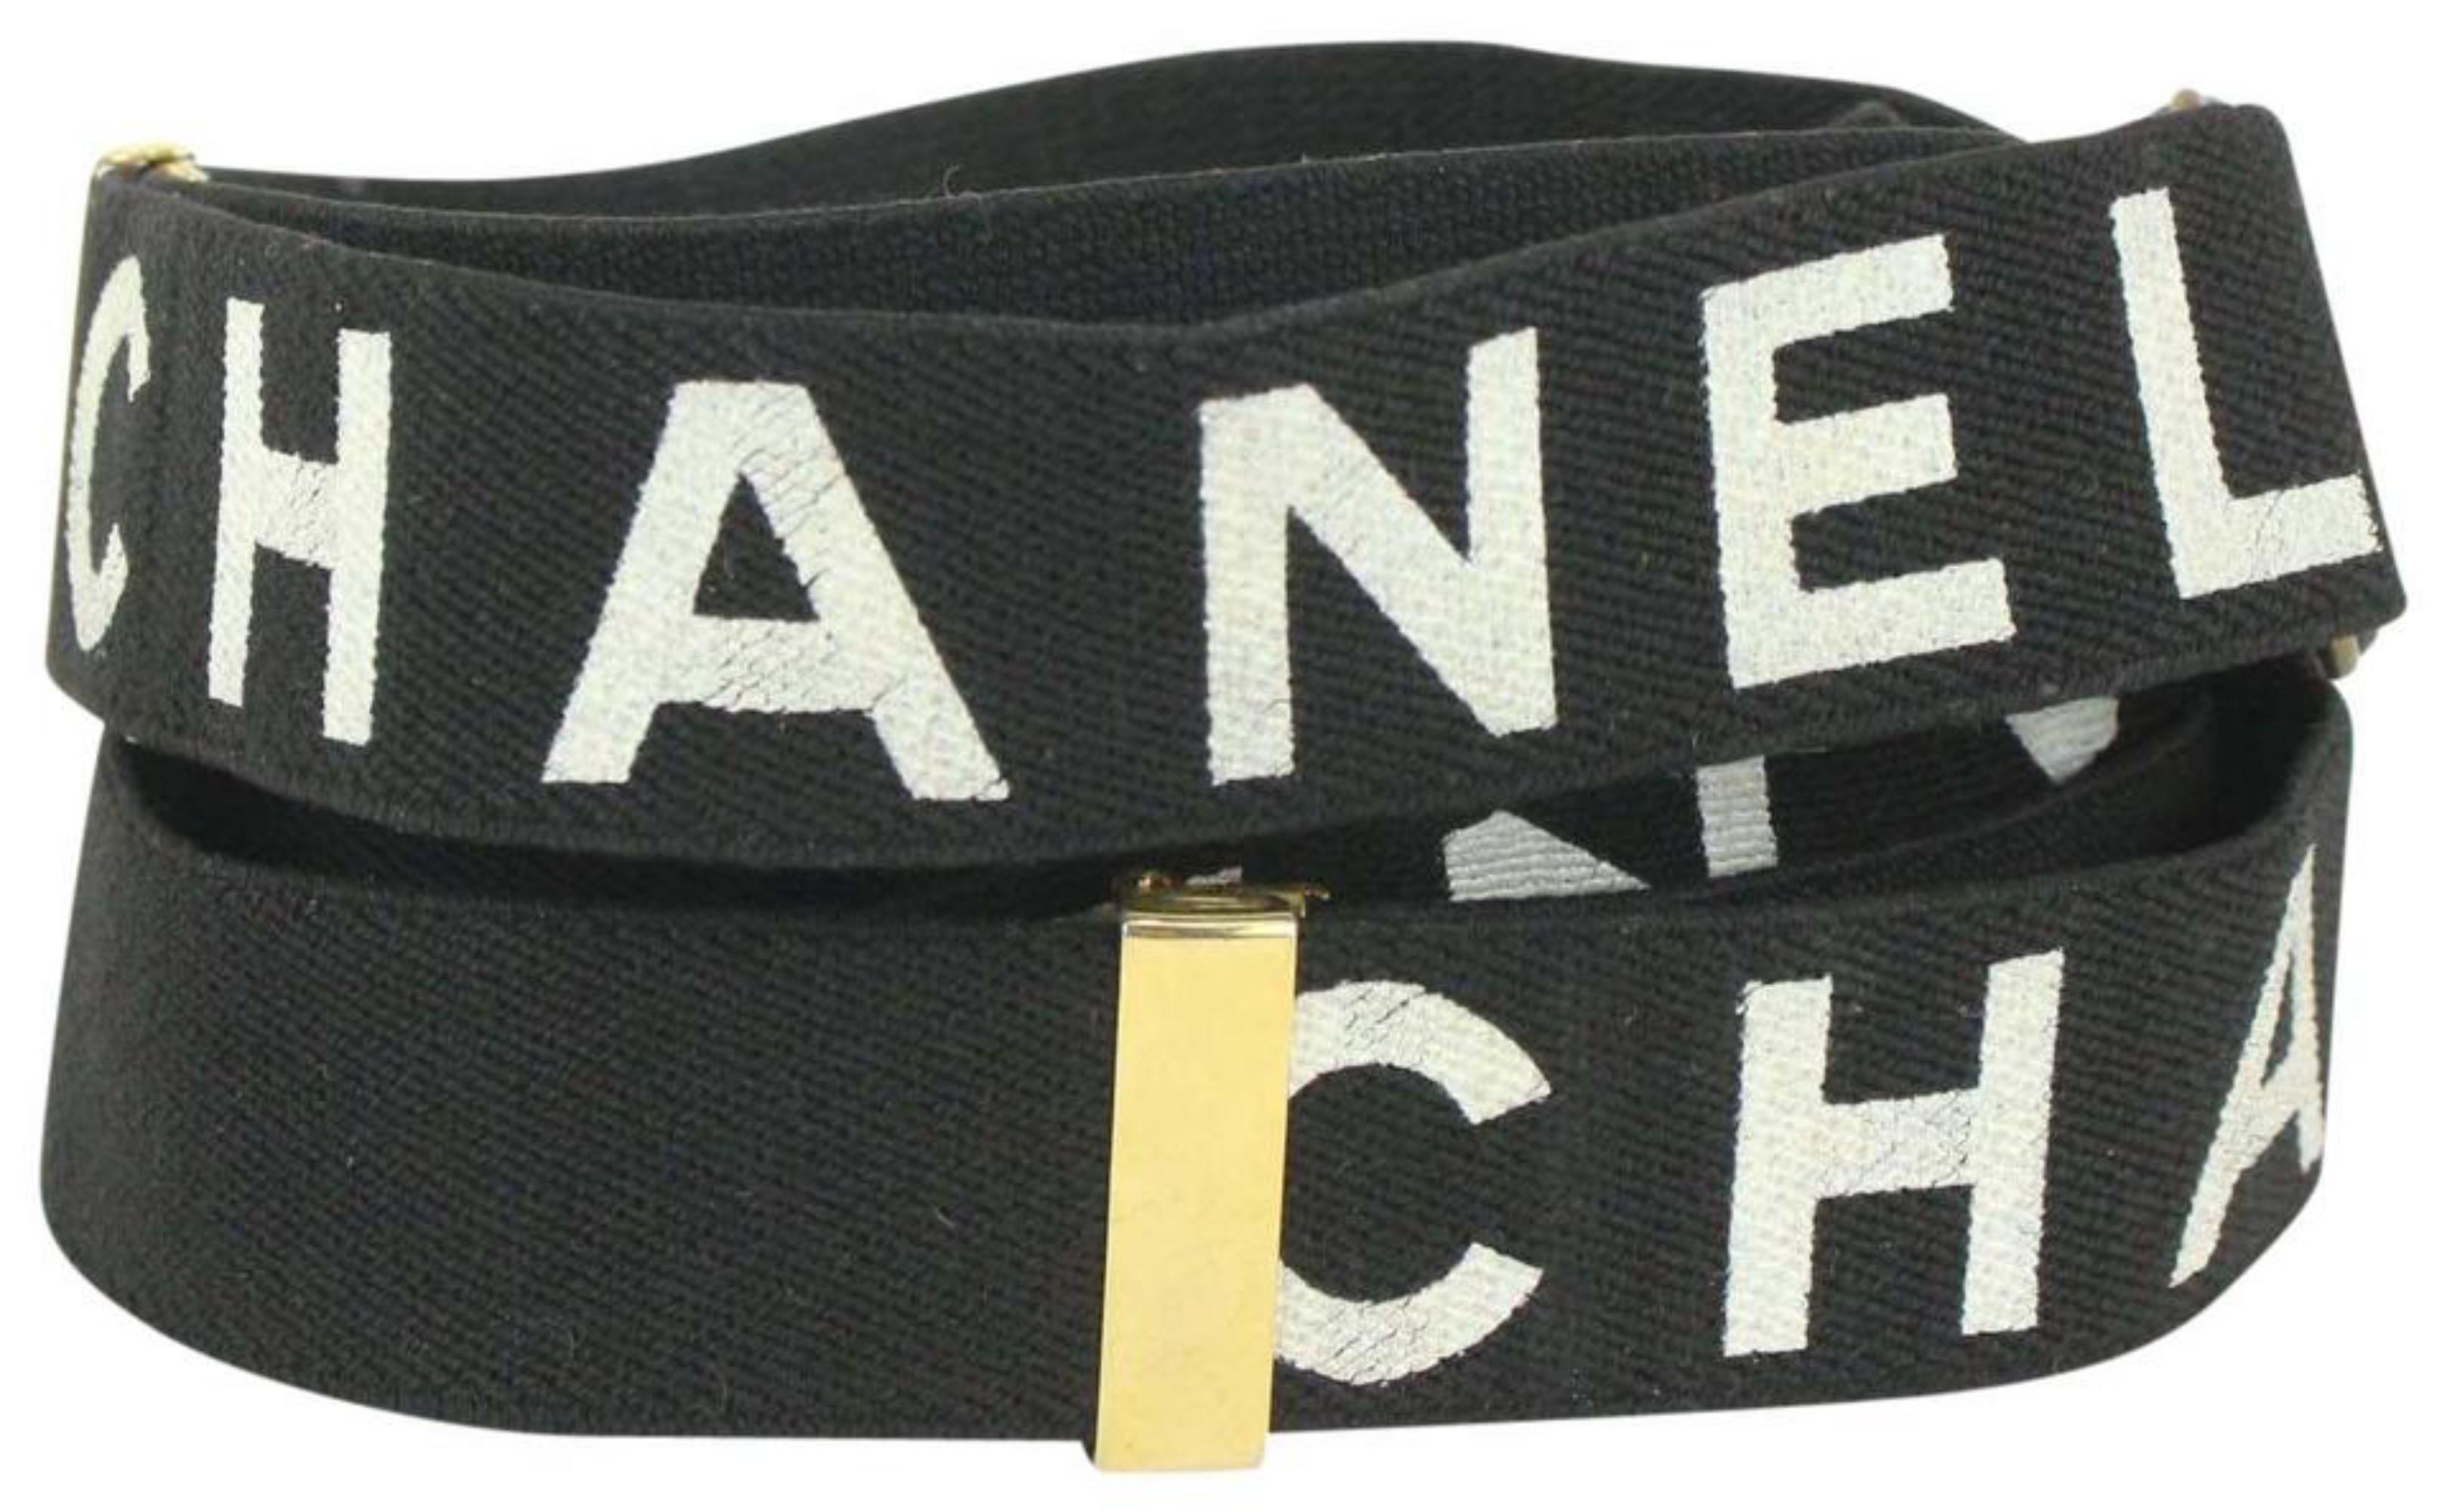 Chanel Rare Runway Black CC Logo Suspenders Braces 0CC1224
Made In: France
Measurements: Length:  43.5